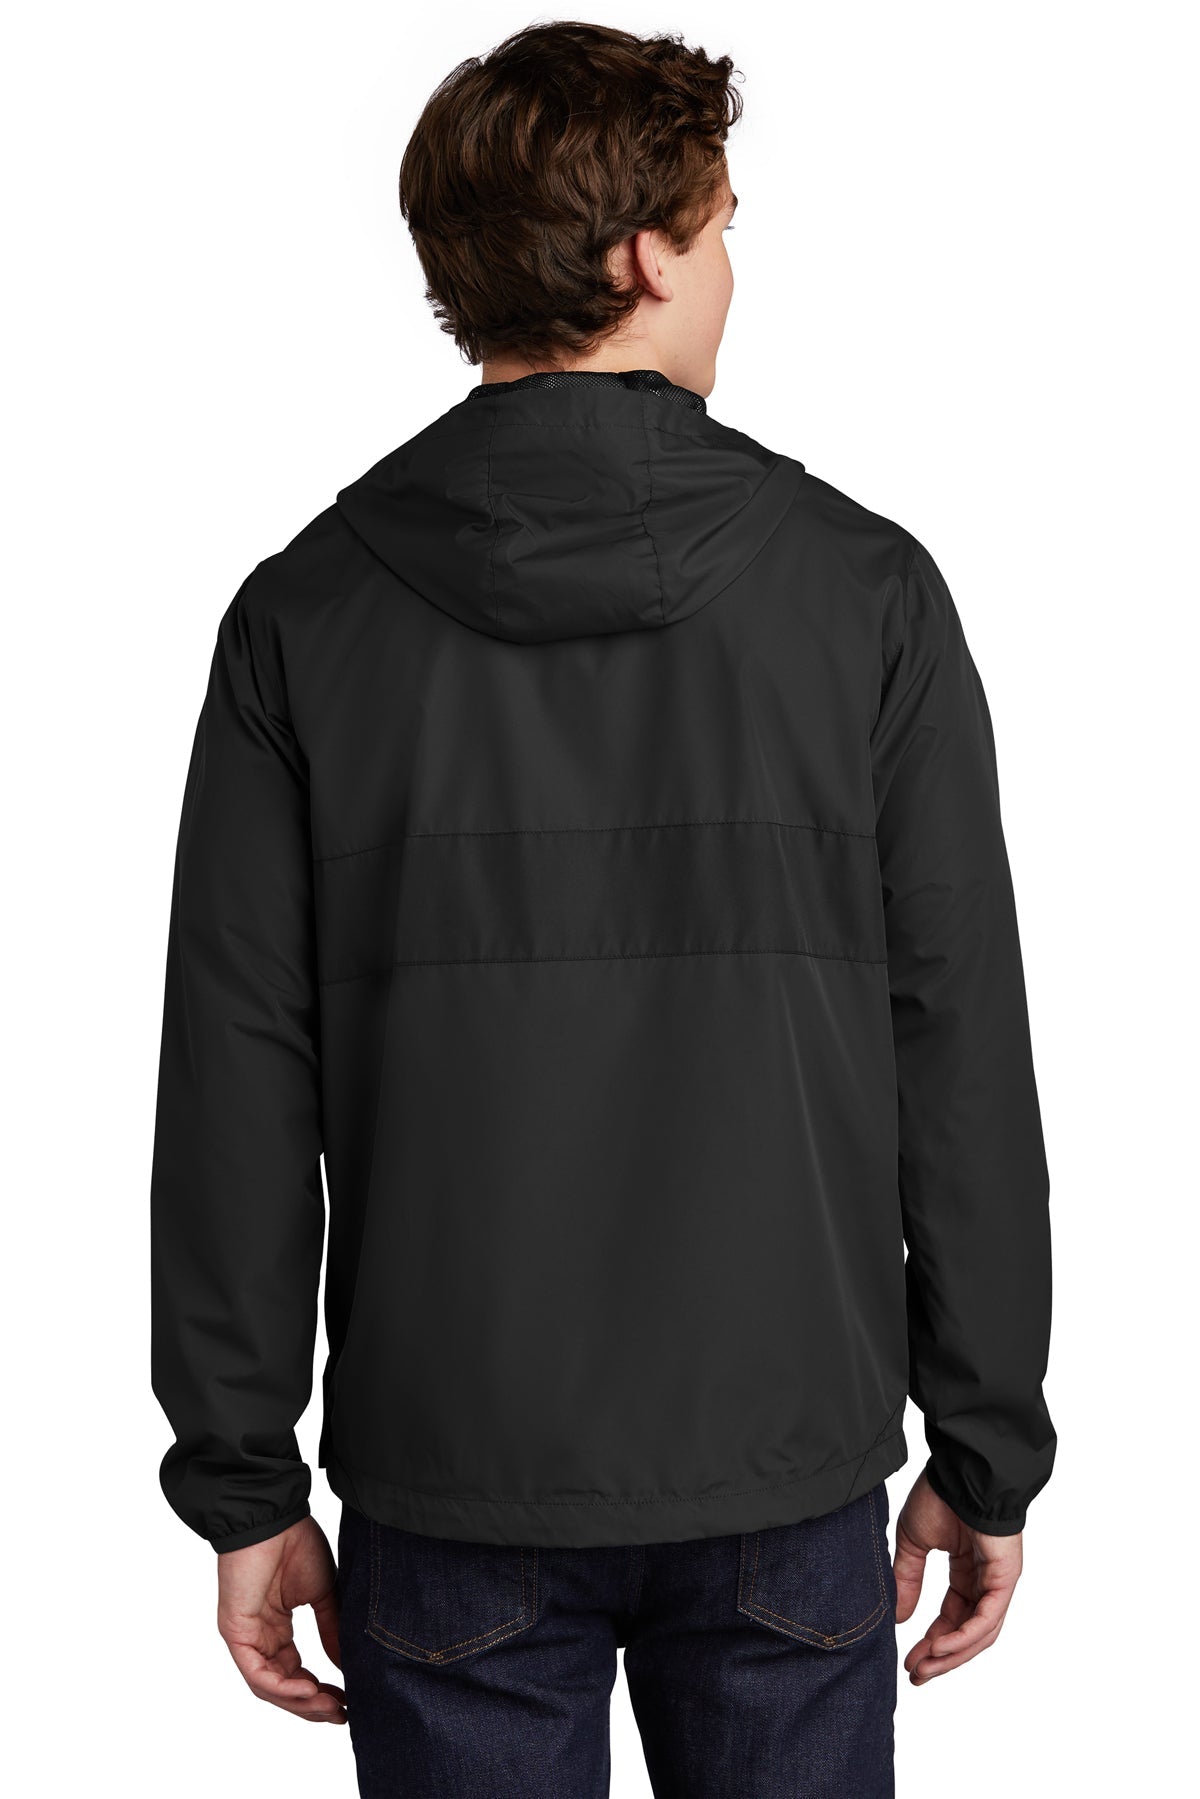 sport-tek_jst65 _black/ black_company_logo_jackets